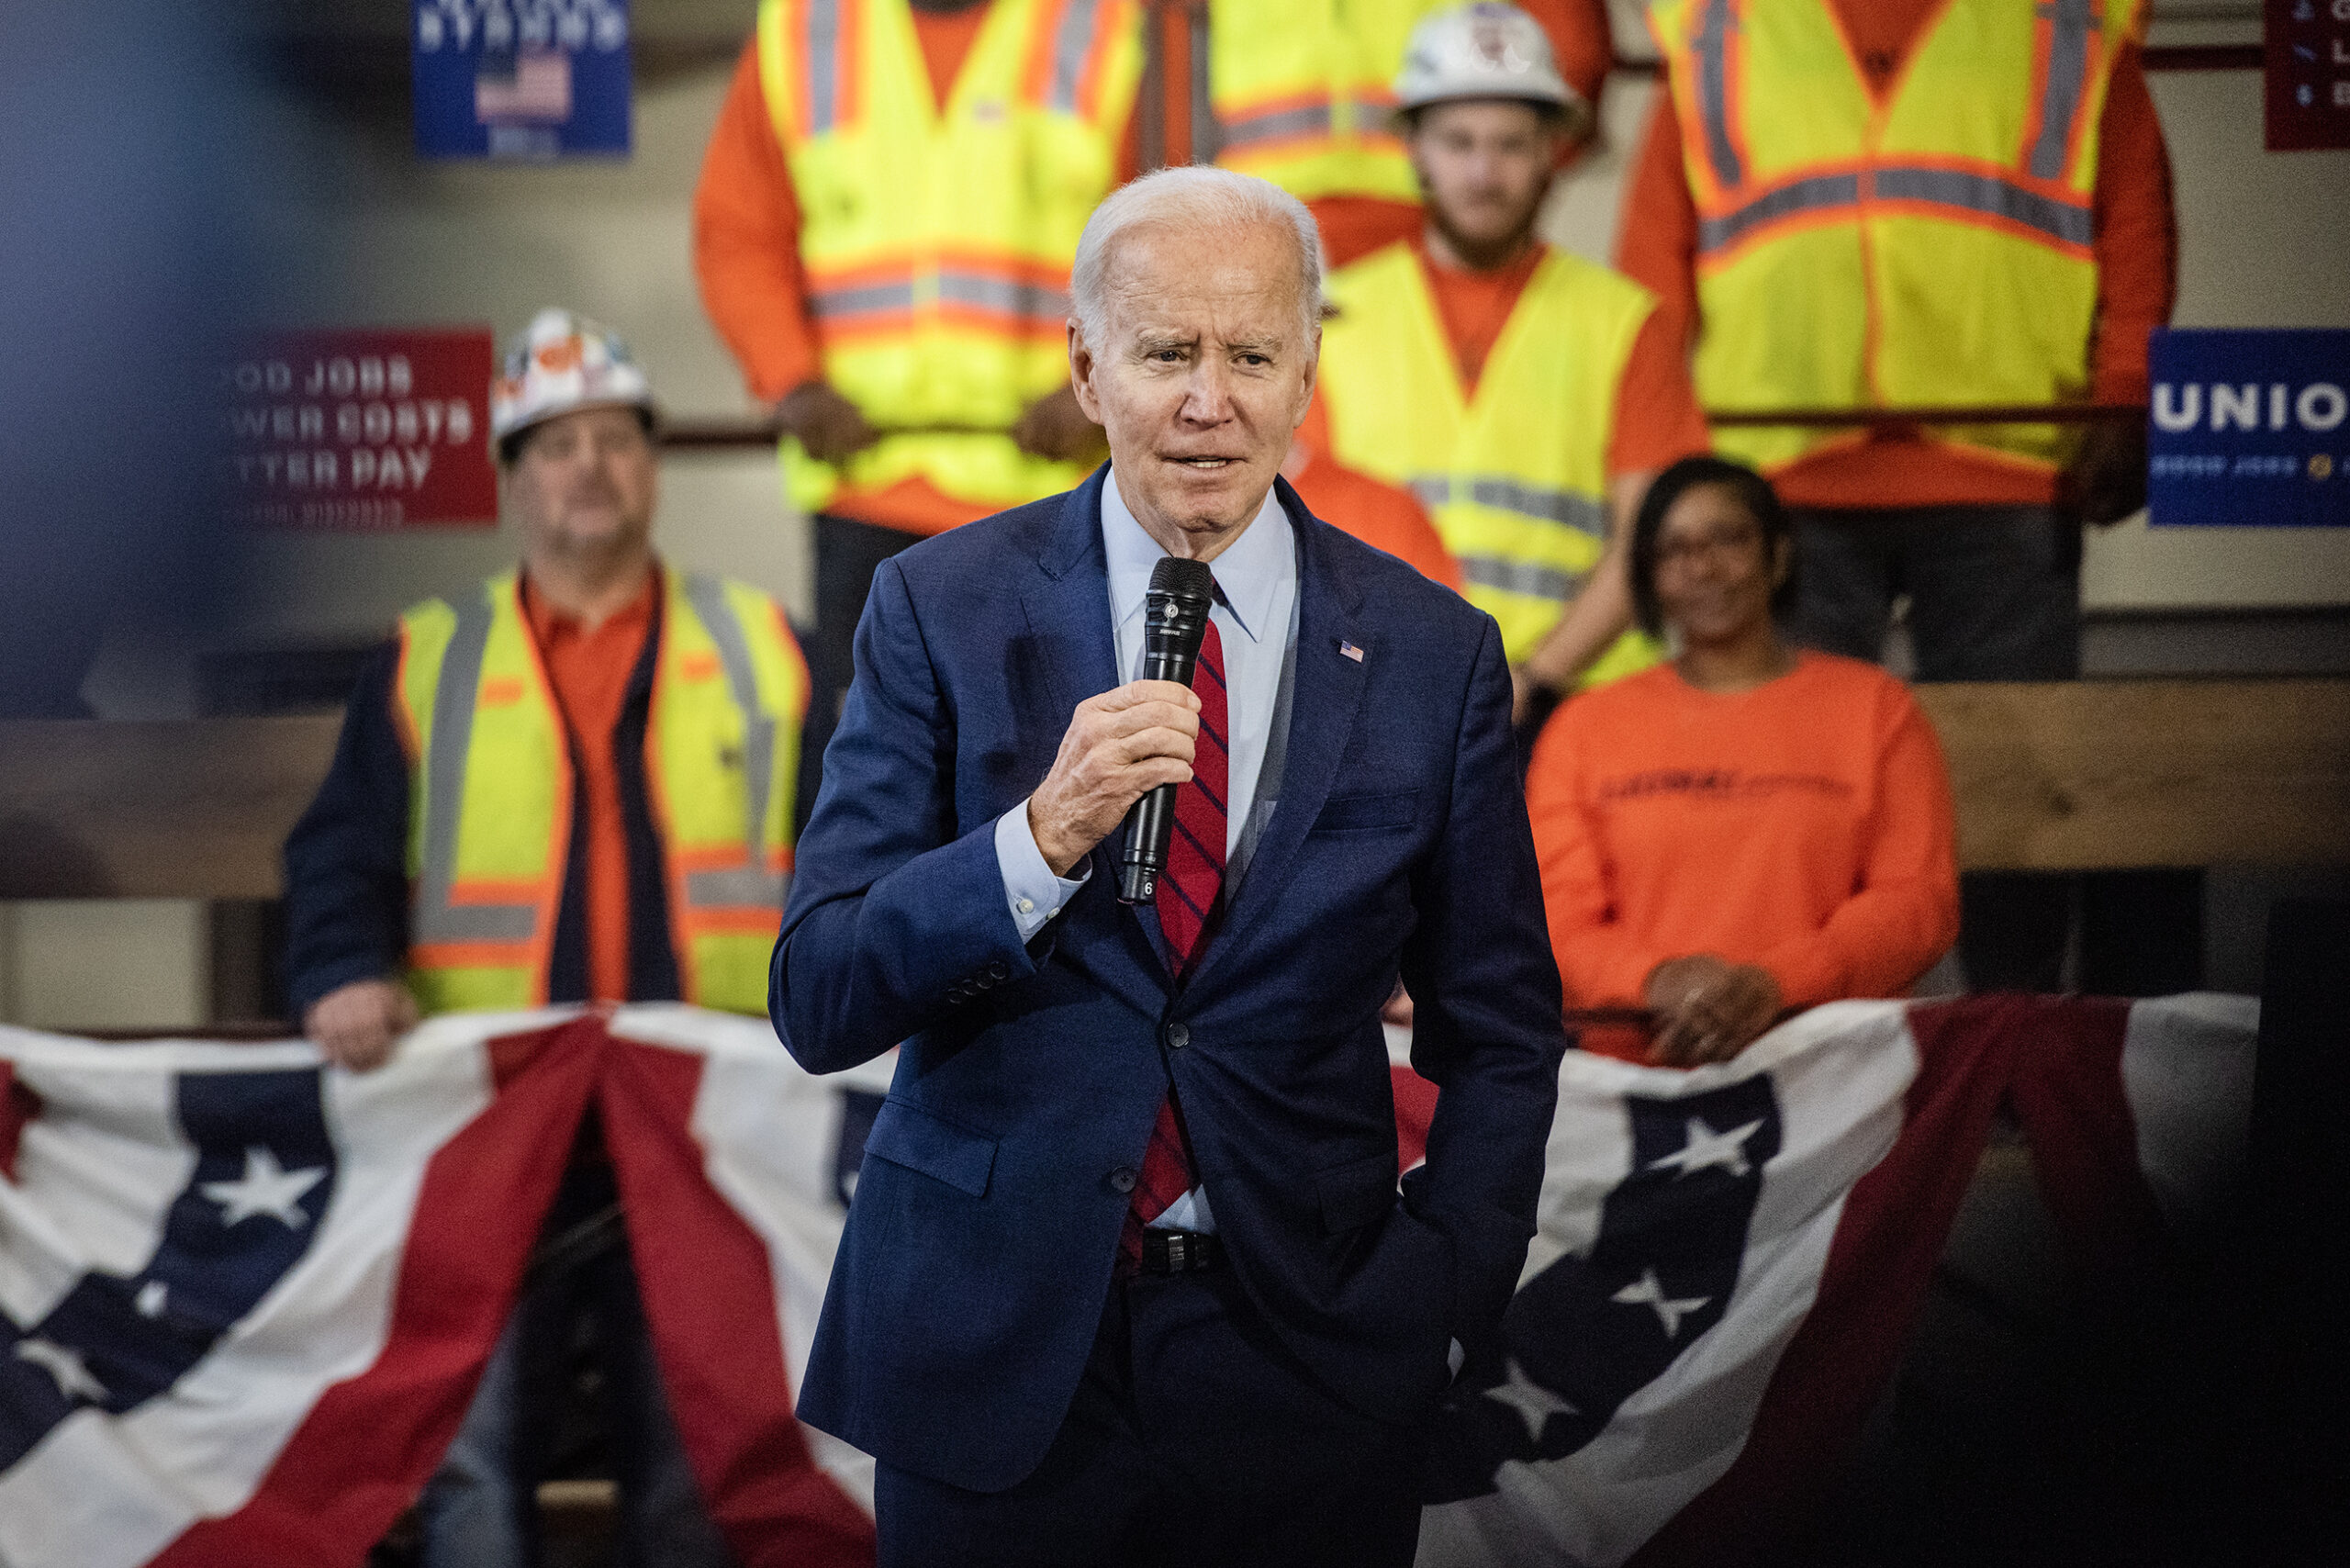 President Joe Biden speaks into a microphone. Workers in neon vests are seen behind him.